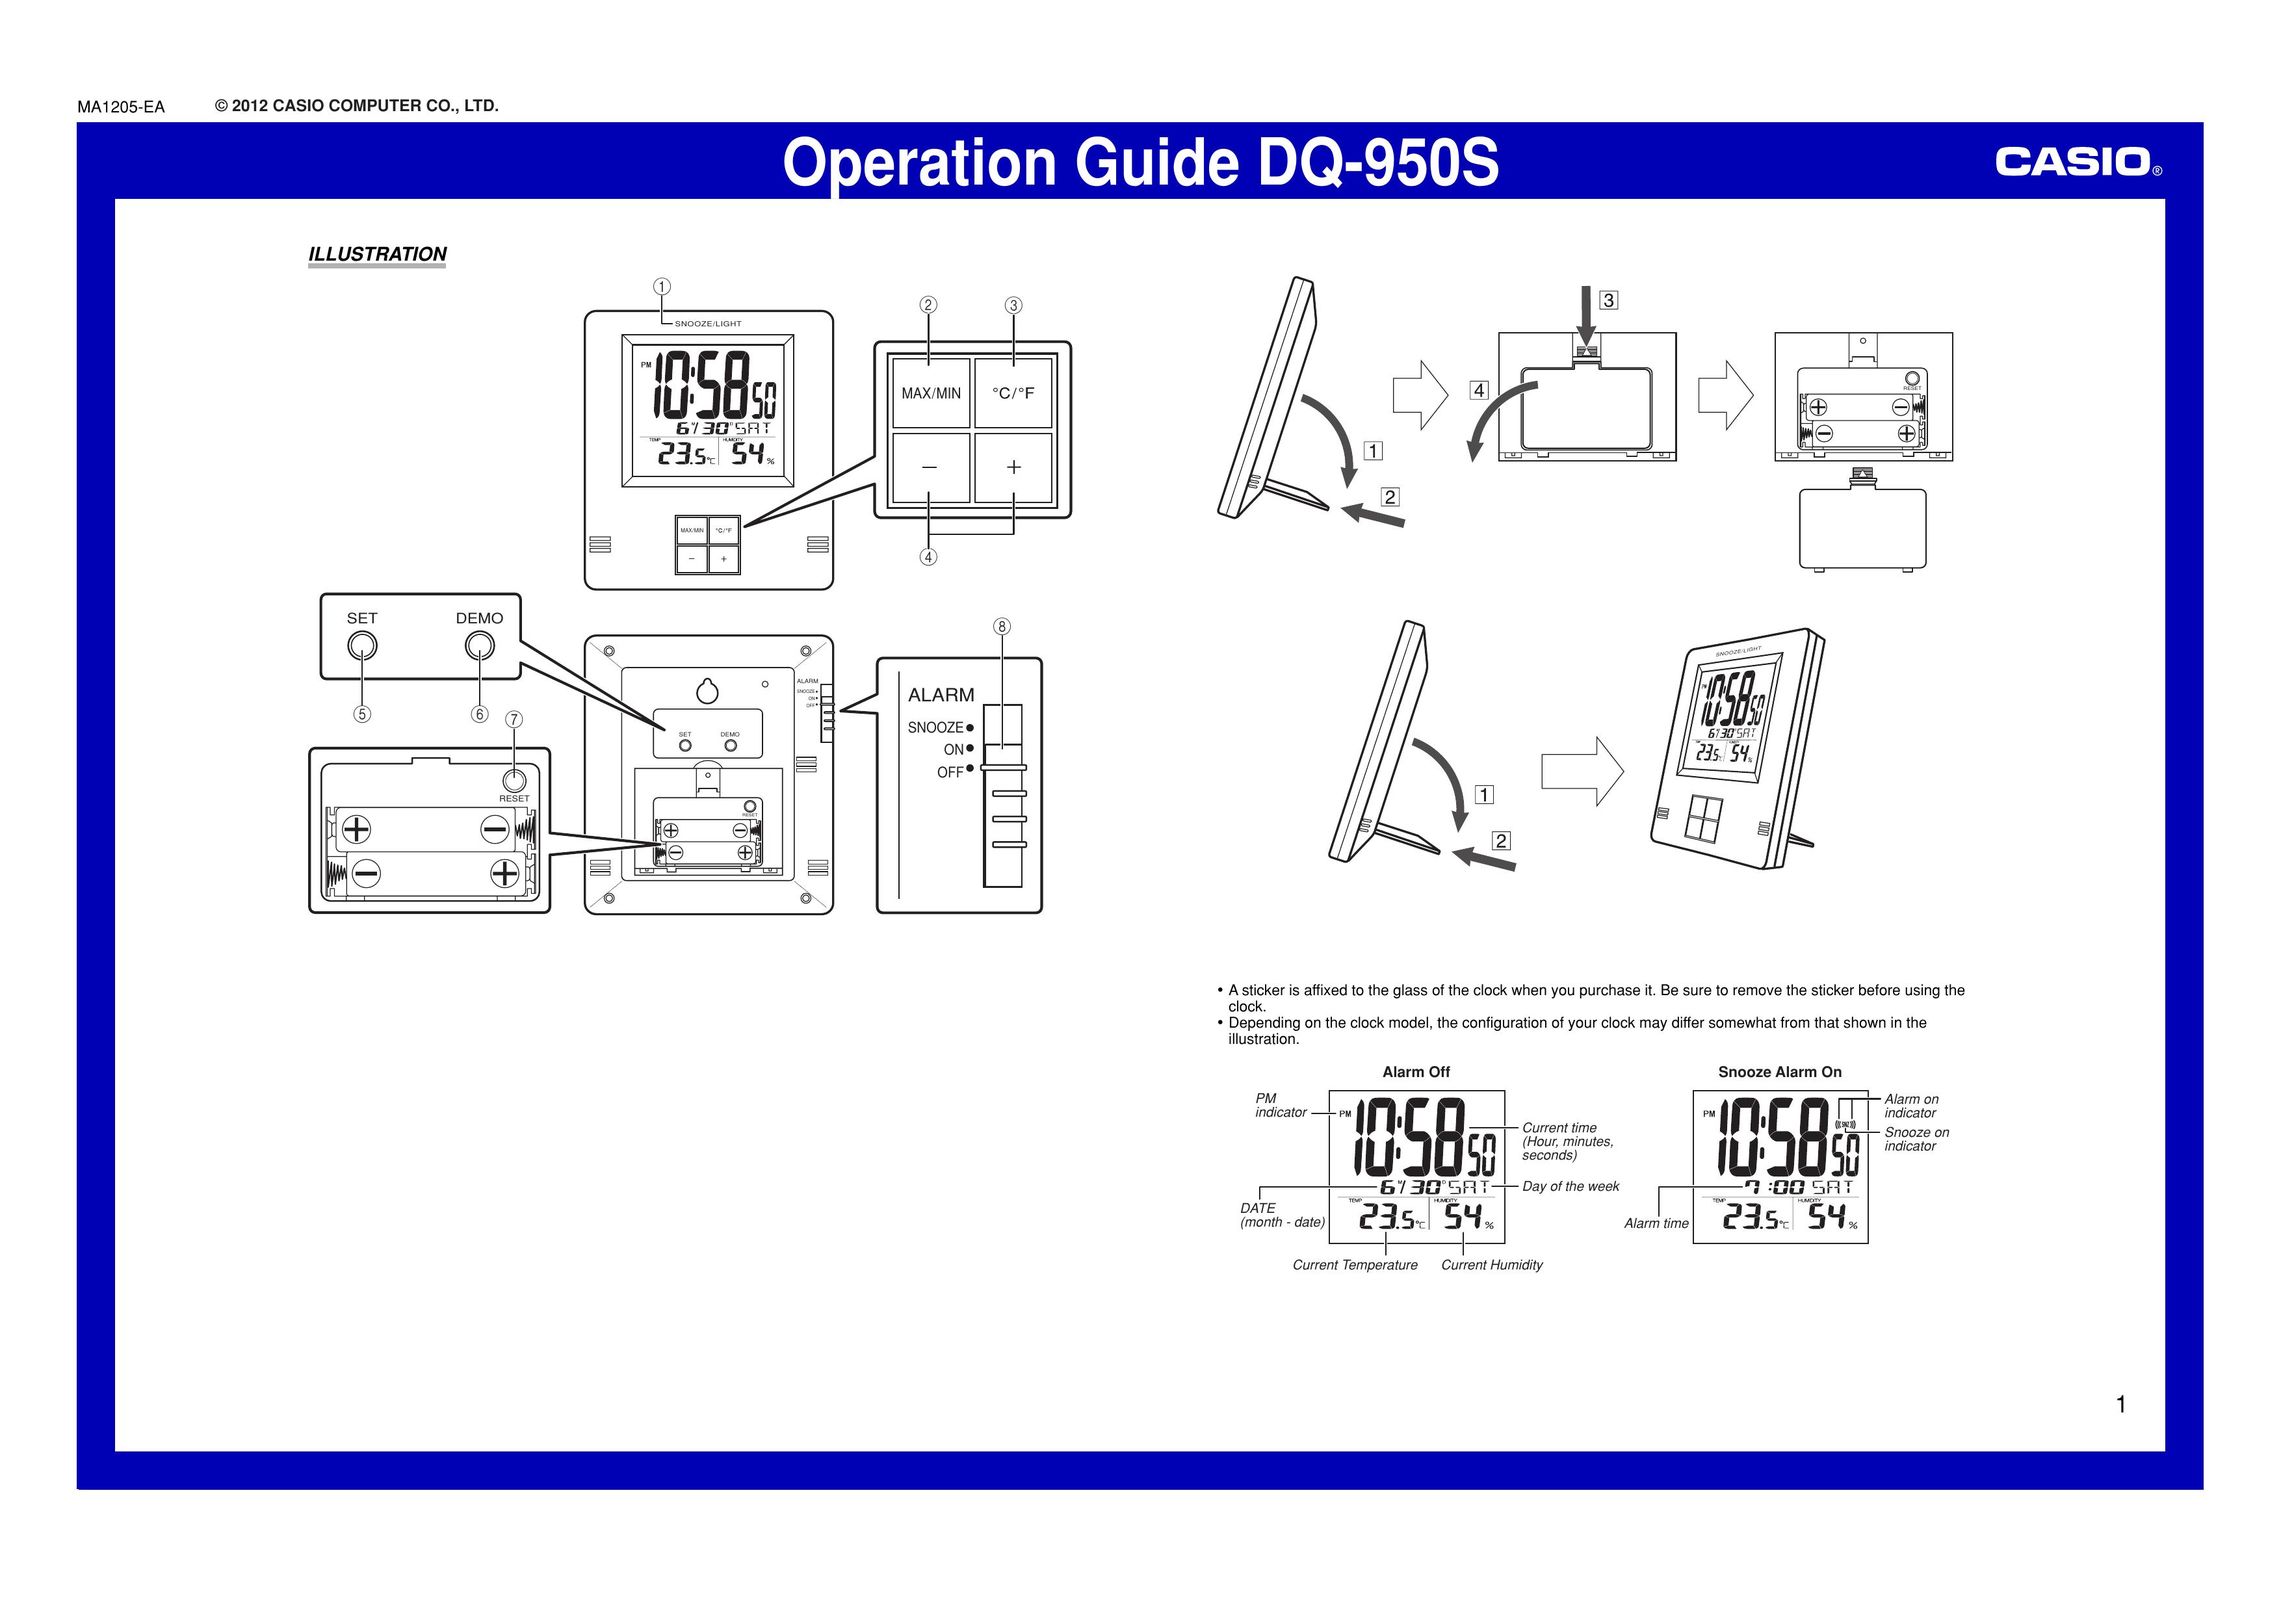 Casio MA1205-EA Clock User Manual (Page 1)